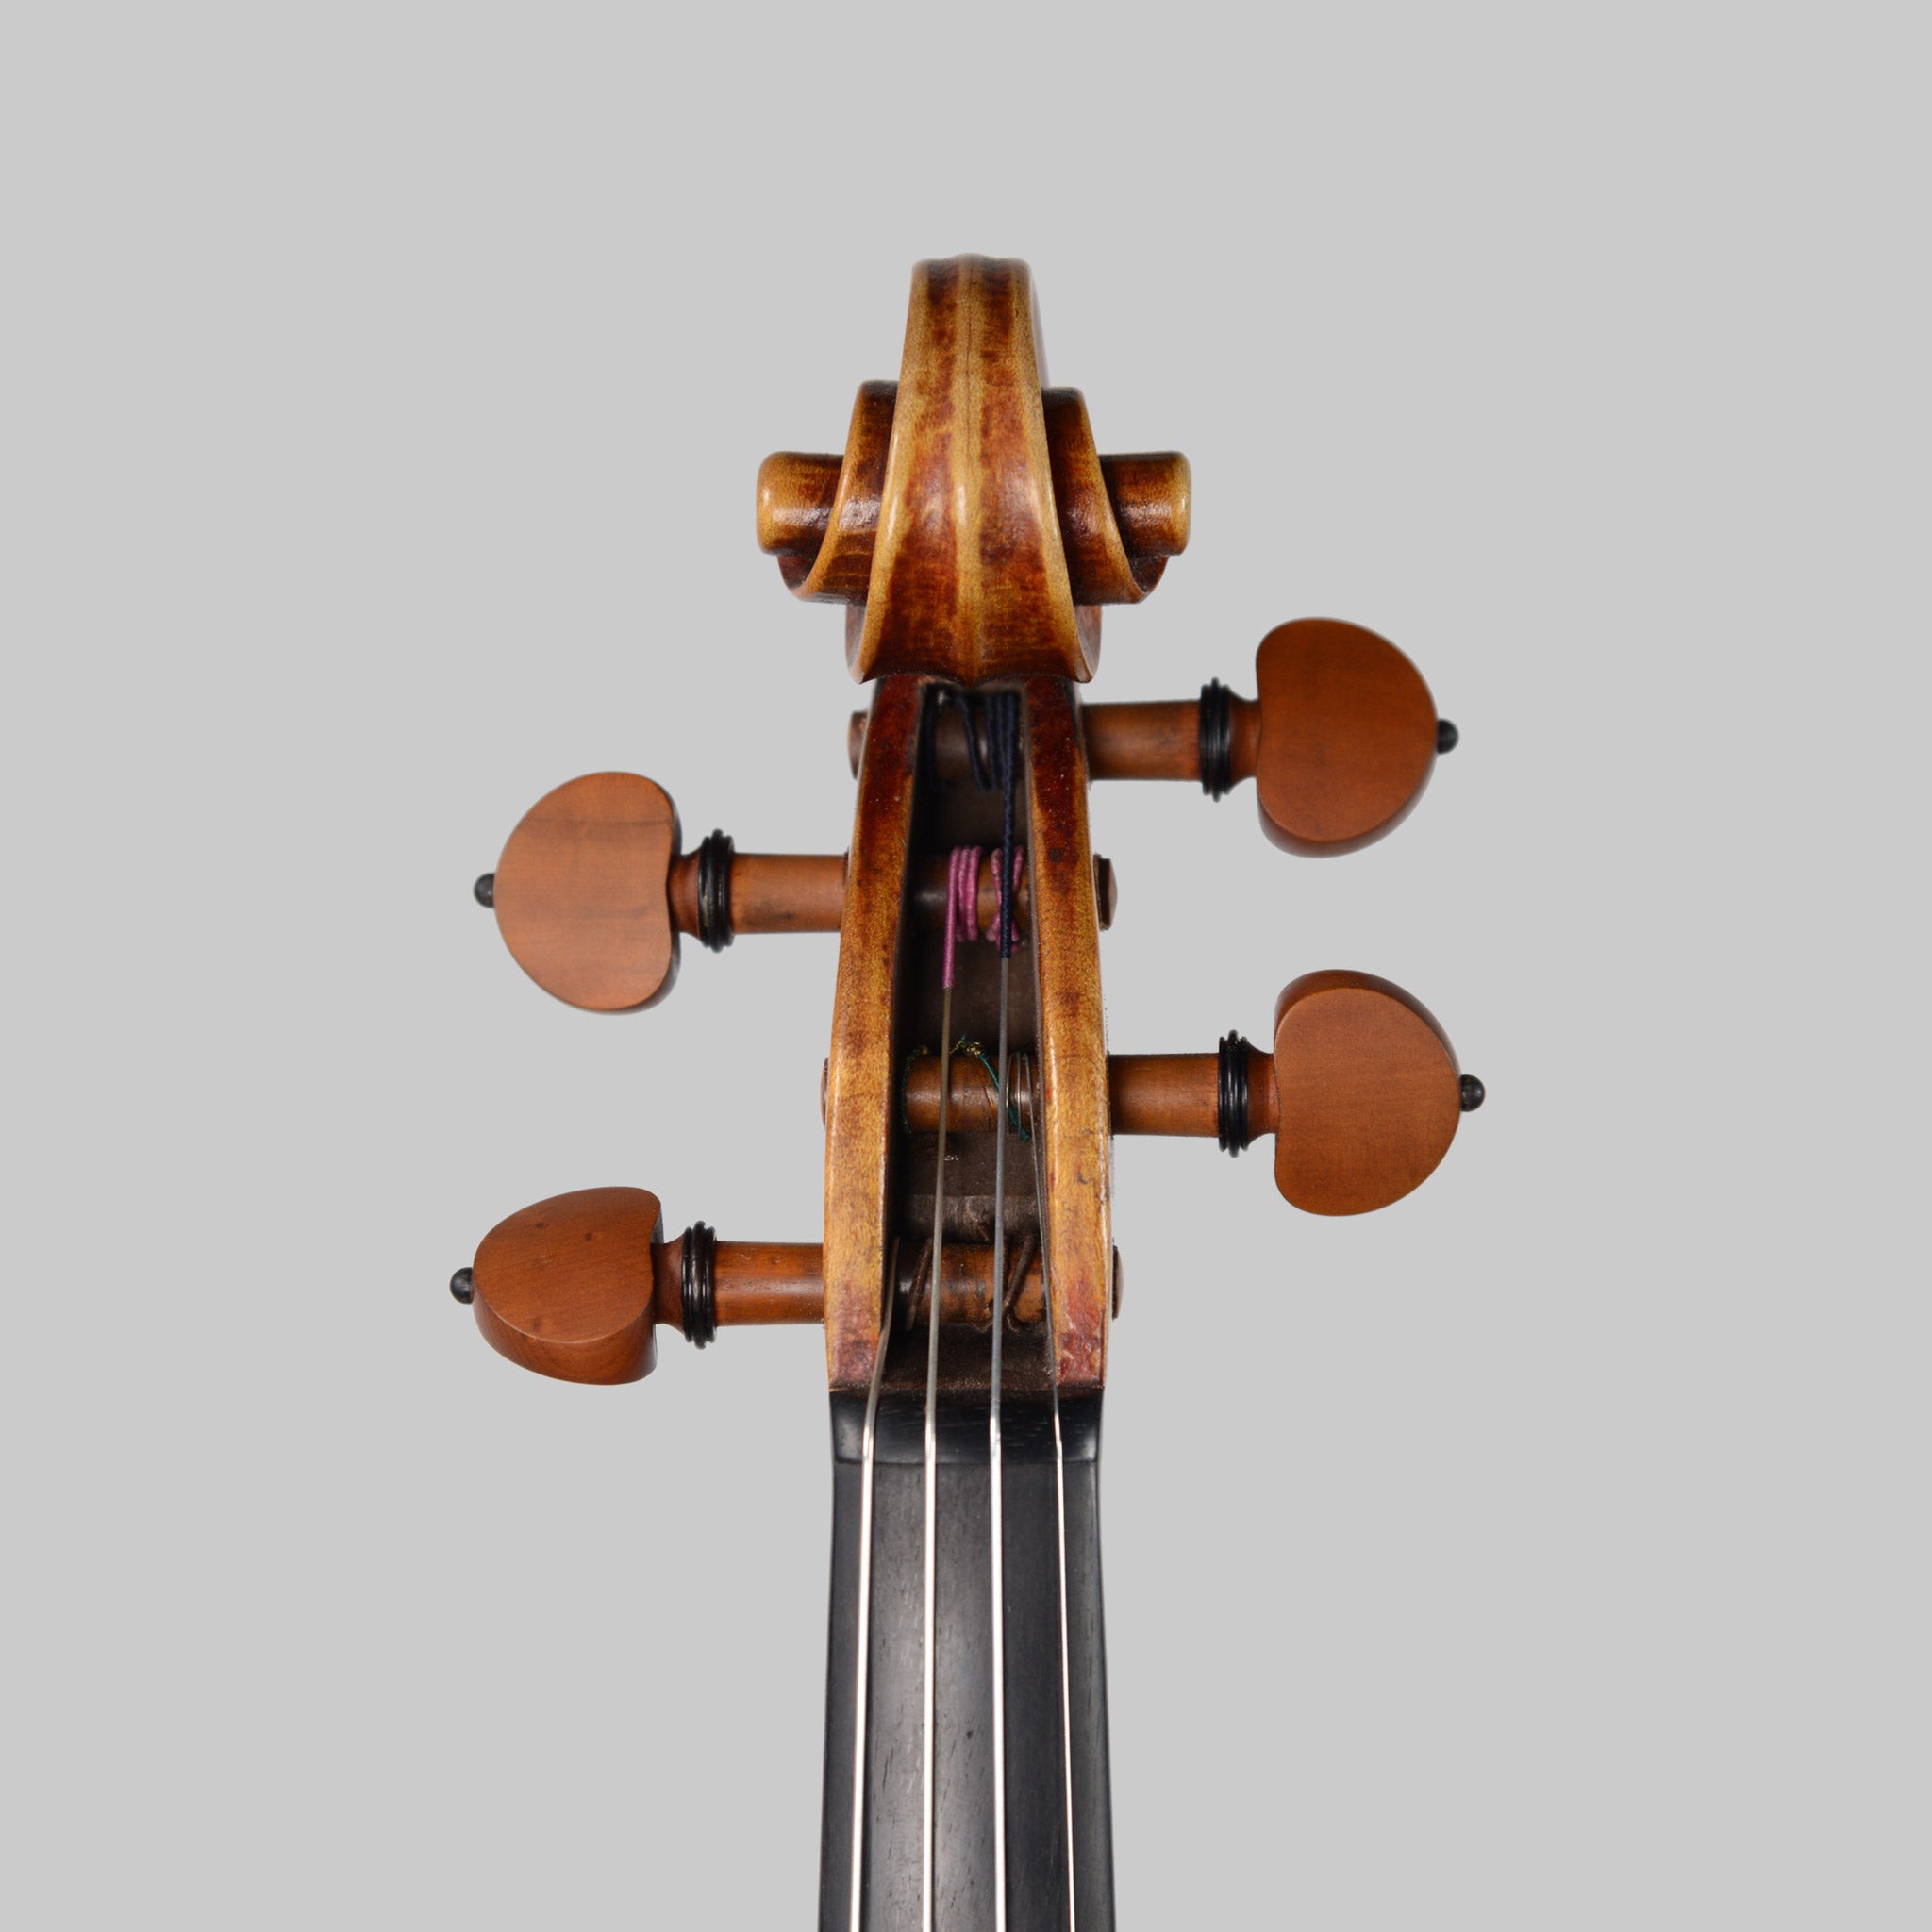 Stefano Gibertoni, Guarneri del Gesú  "Ysaÿe" 2020 Violin